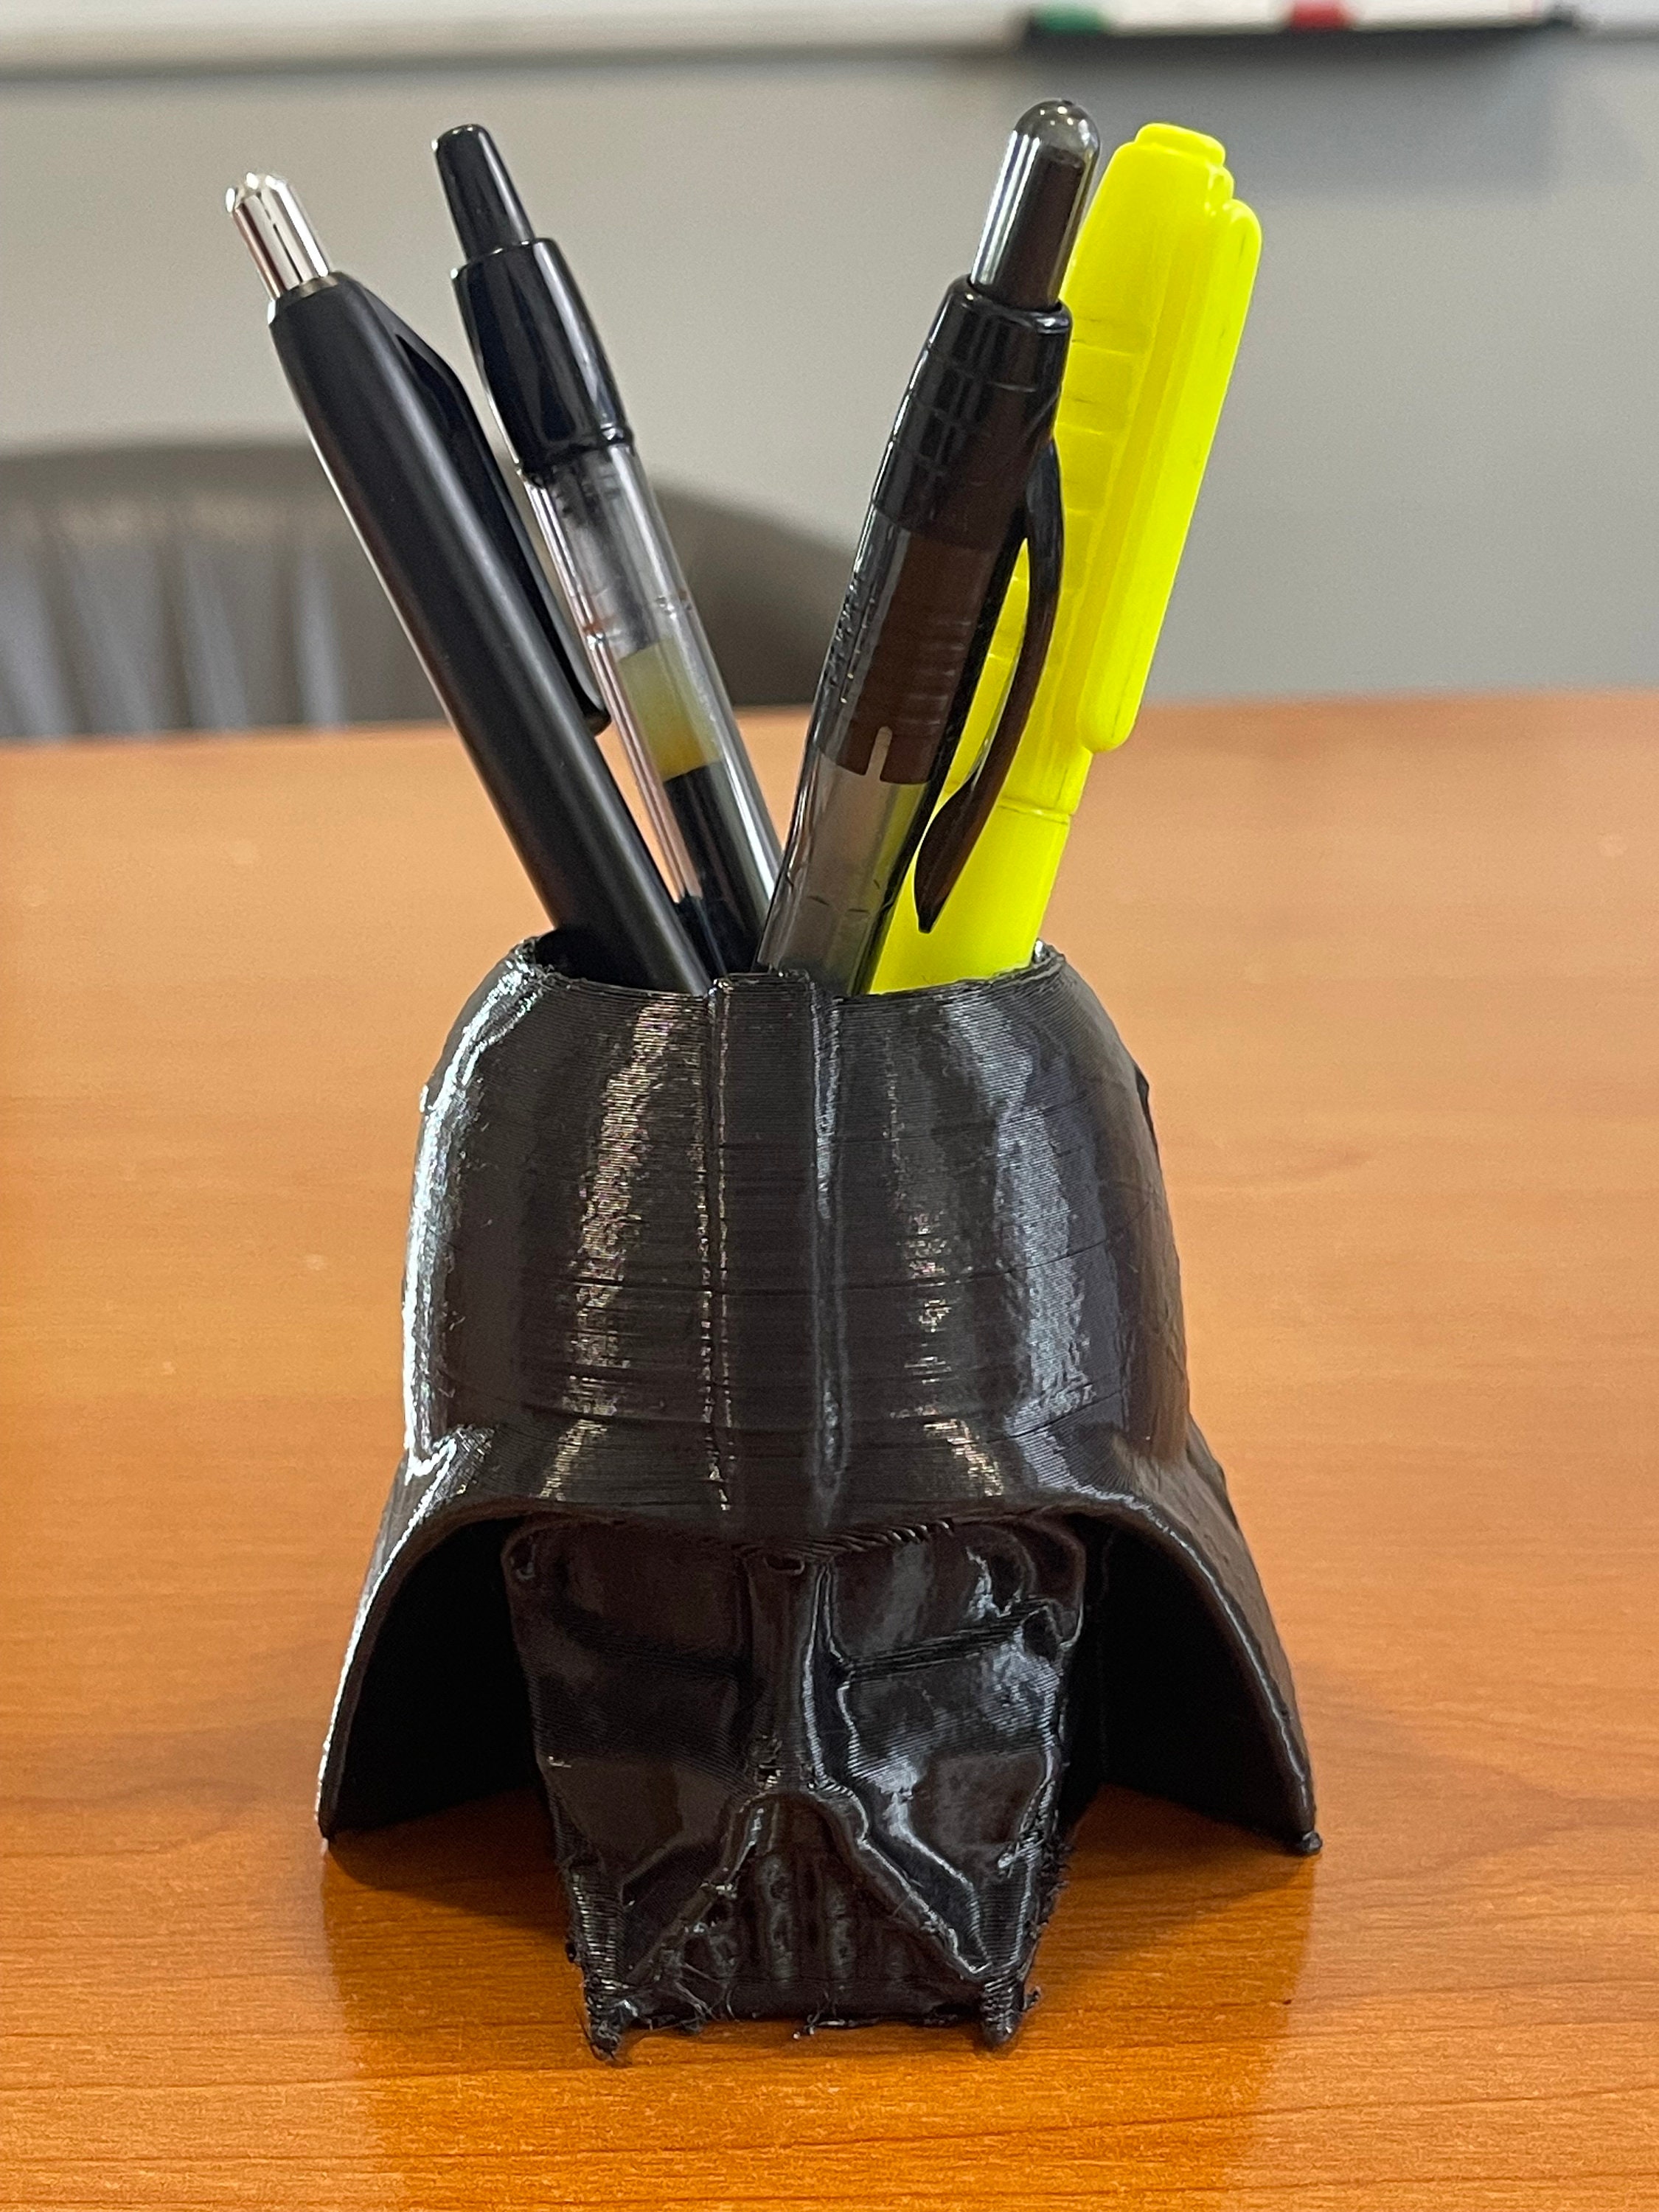 Darth Vader Pen Holder, Desktop Gadget, Star Wars Gift, Pen/Pencil Holder,  Low Polygon, Office Accessories, Geeky Desk Gadget -  Italia